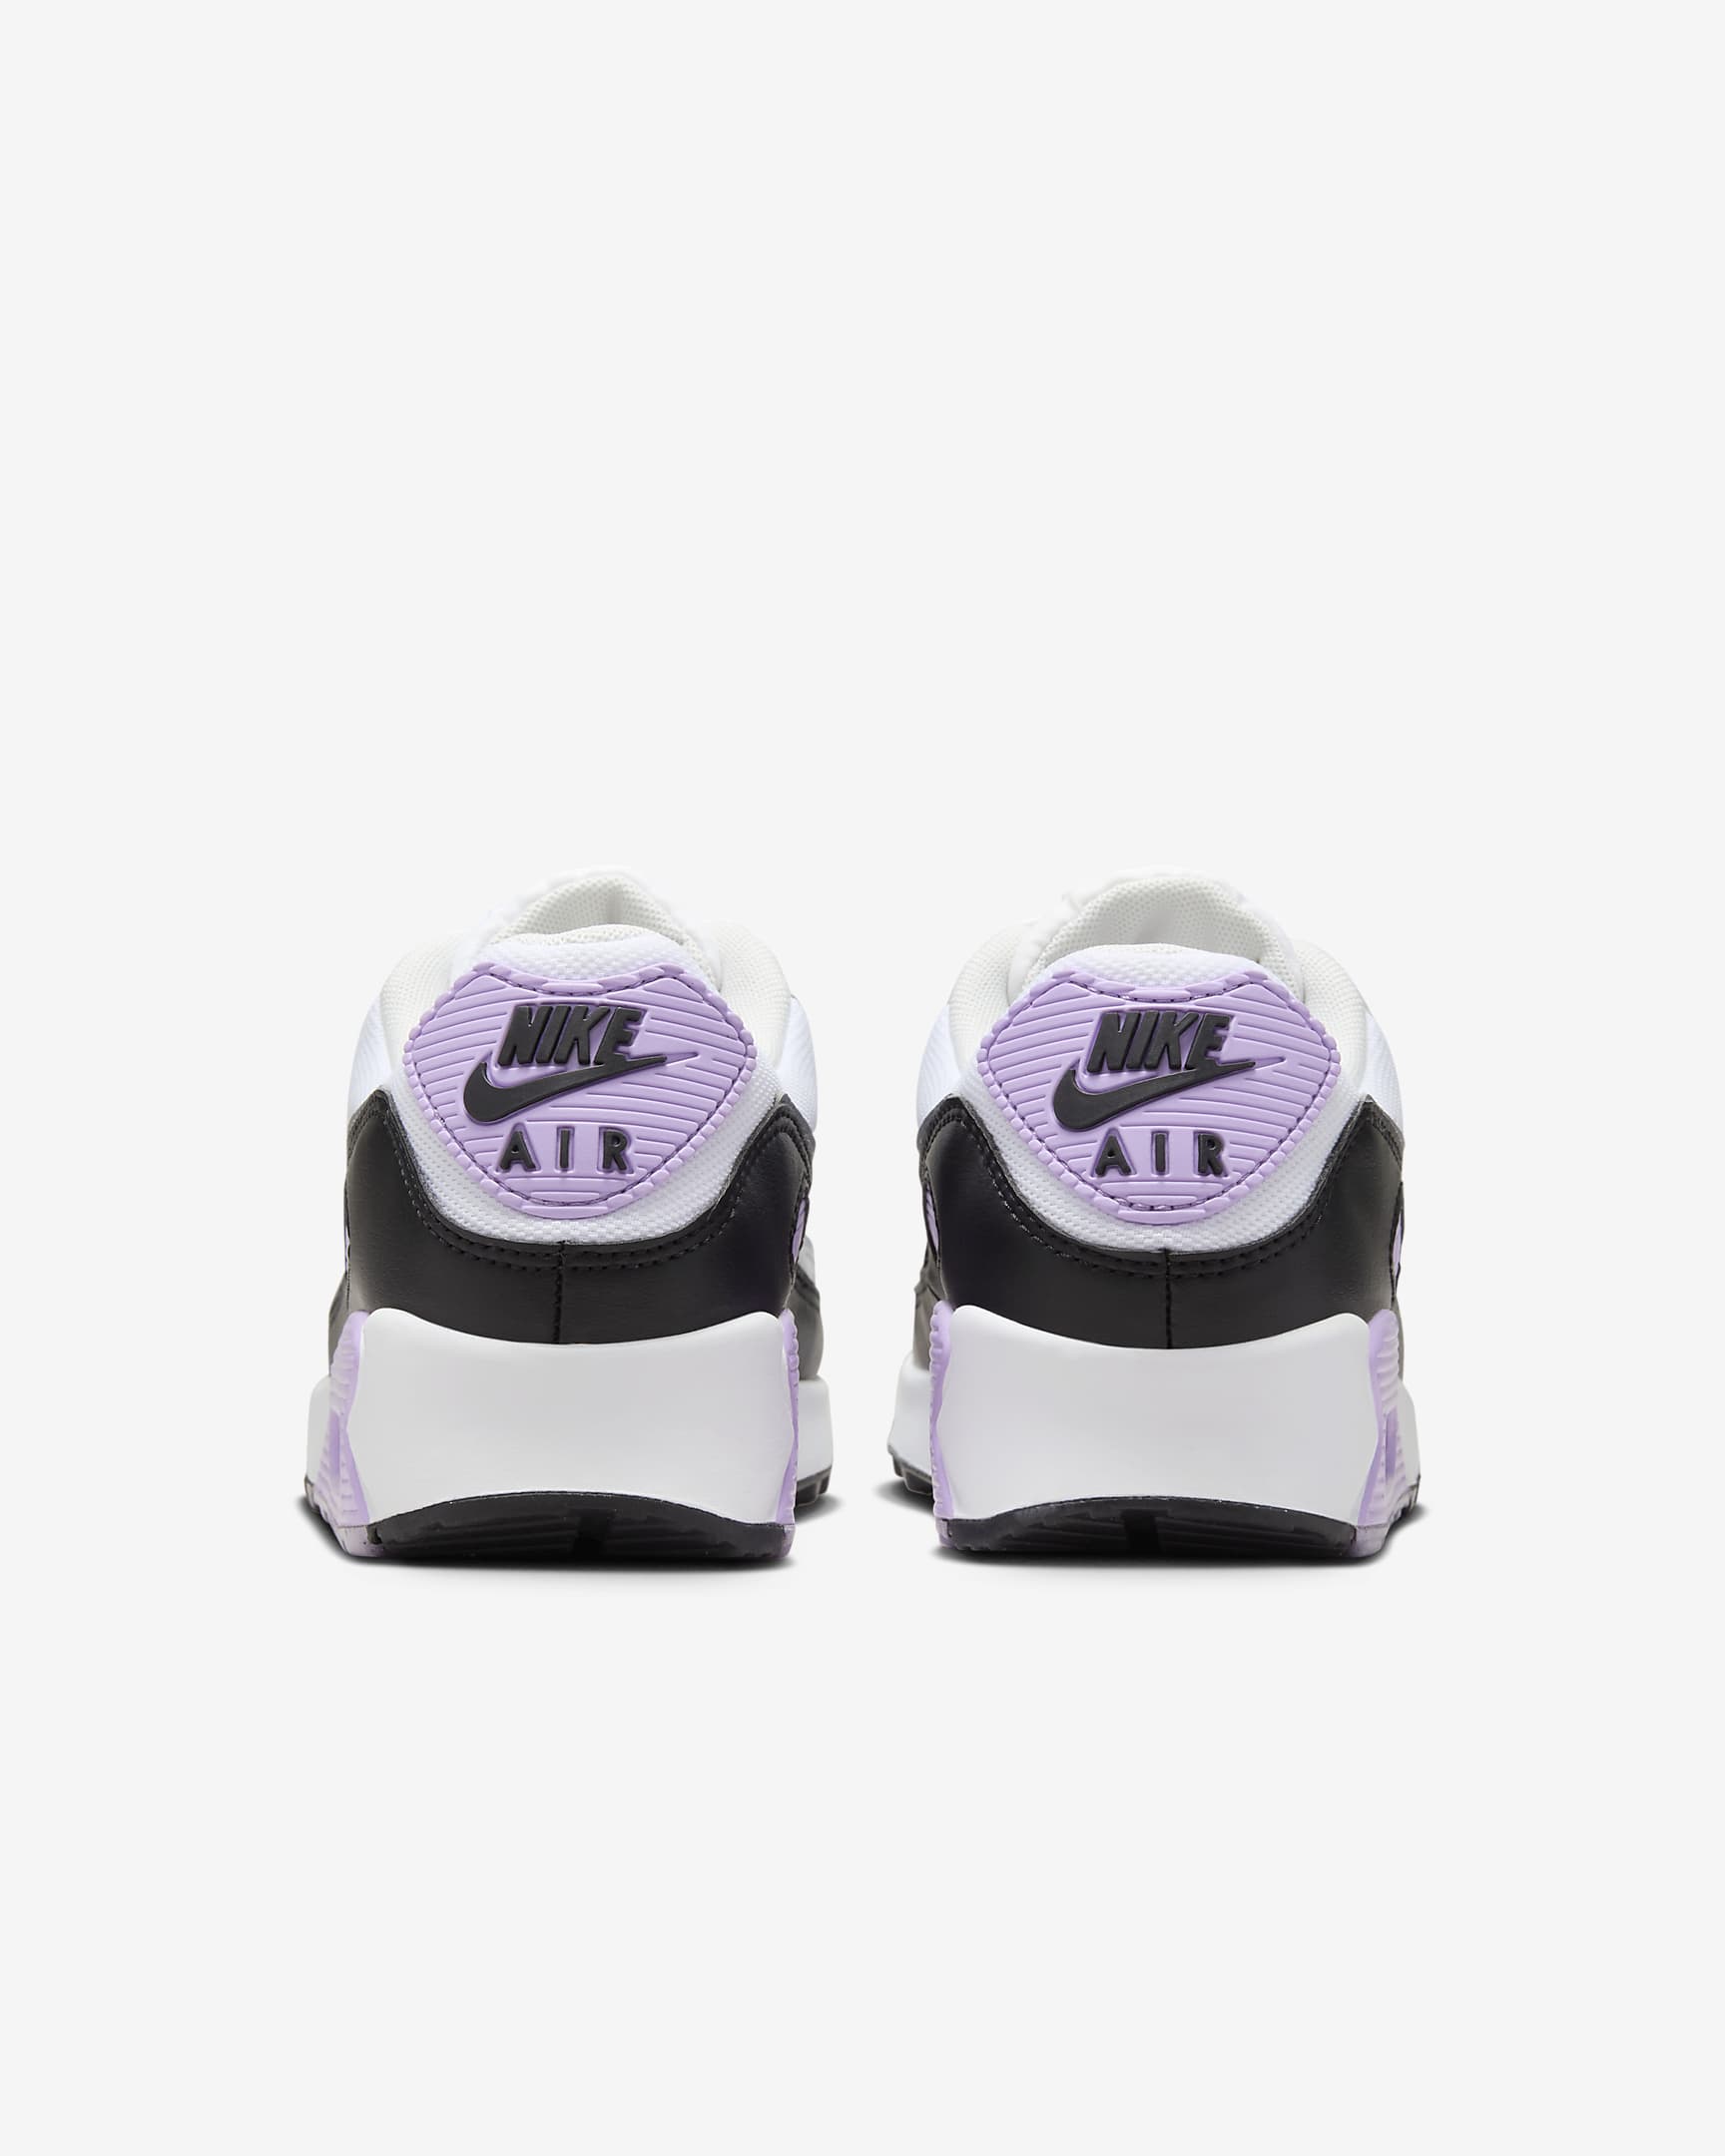 Nike Air Max 90 Women's Shoes - White/Lilac/Photon Dust/Cool Grey